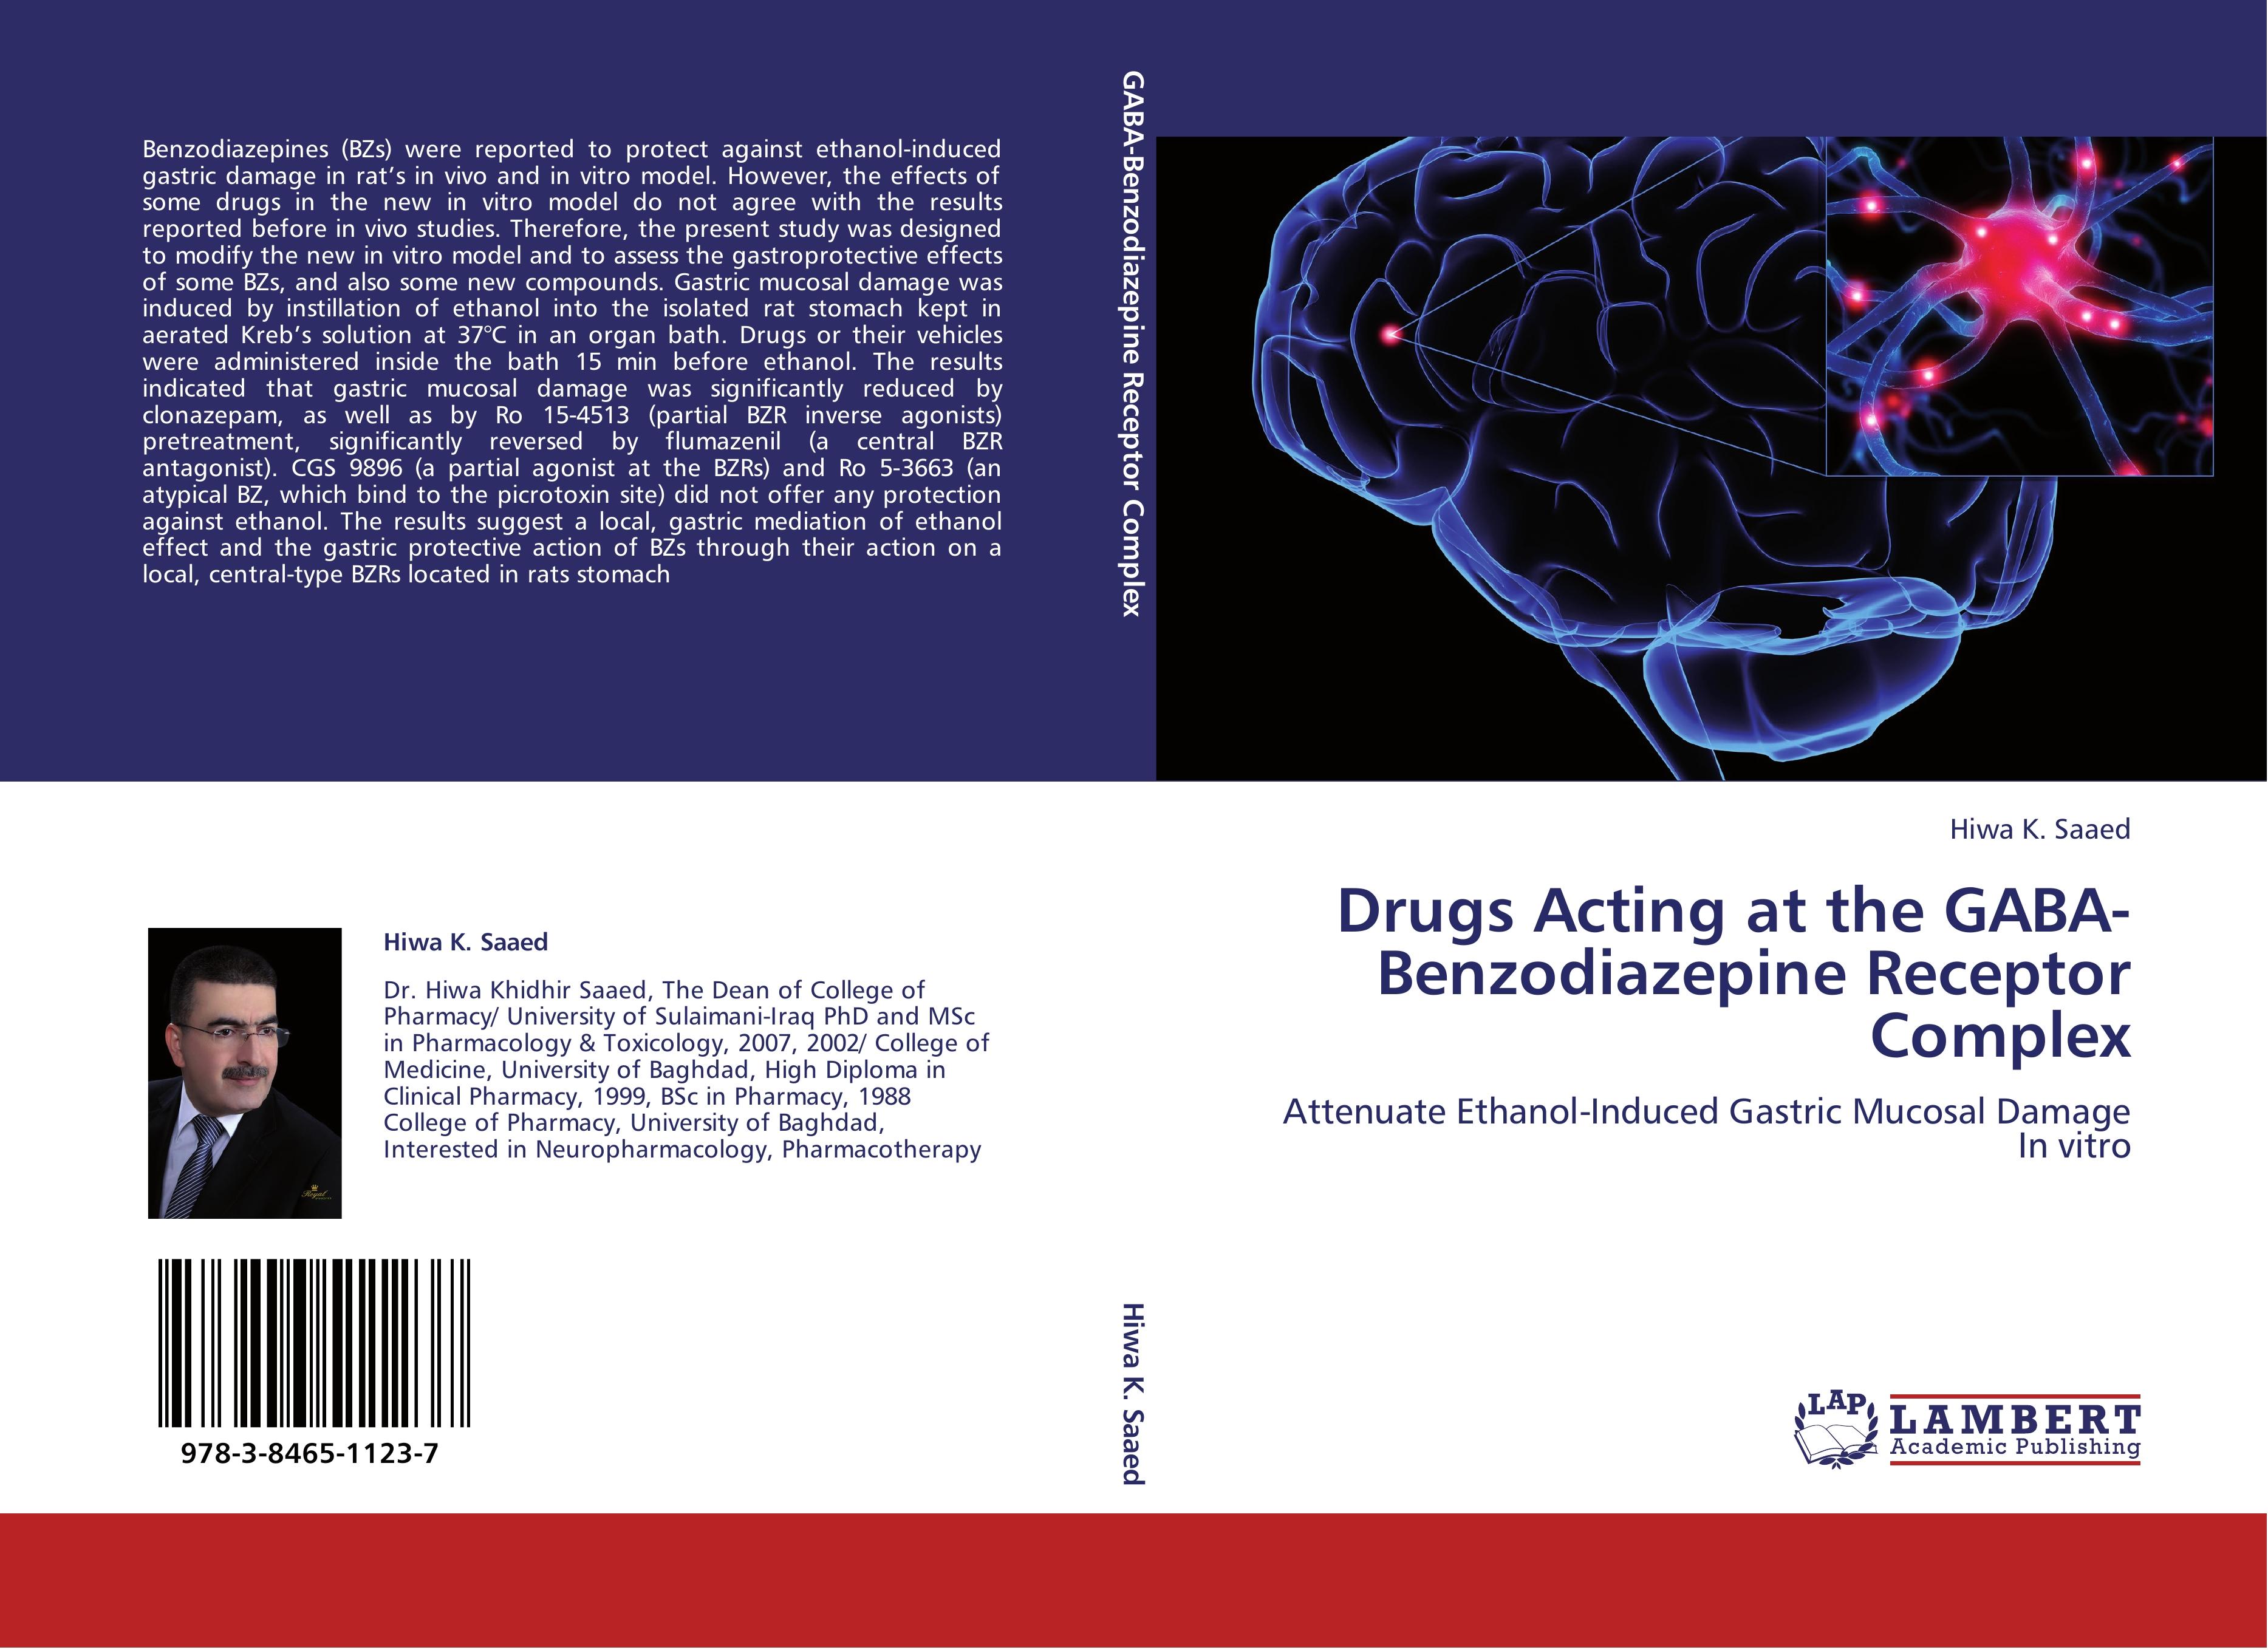 Drugs Acting at the GABA-Benzodiazepine Receptor Complex - Hiwa K. Saaed